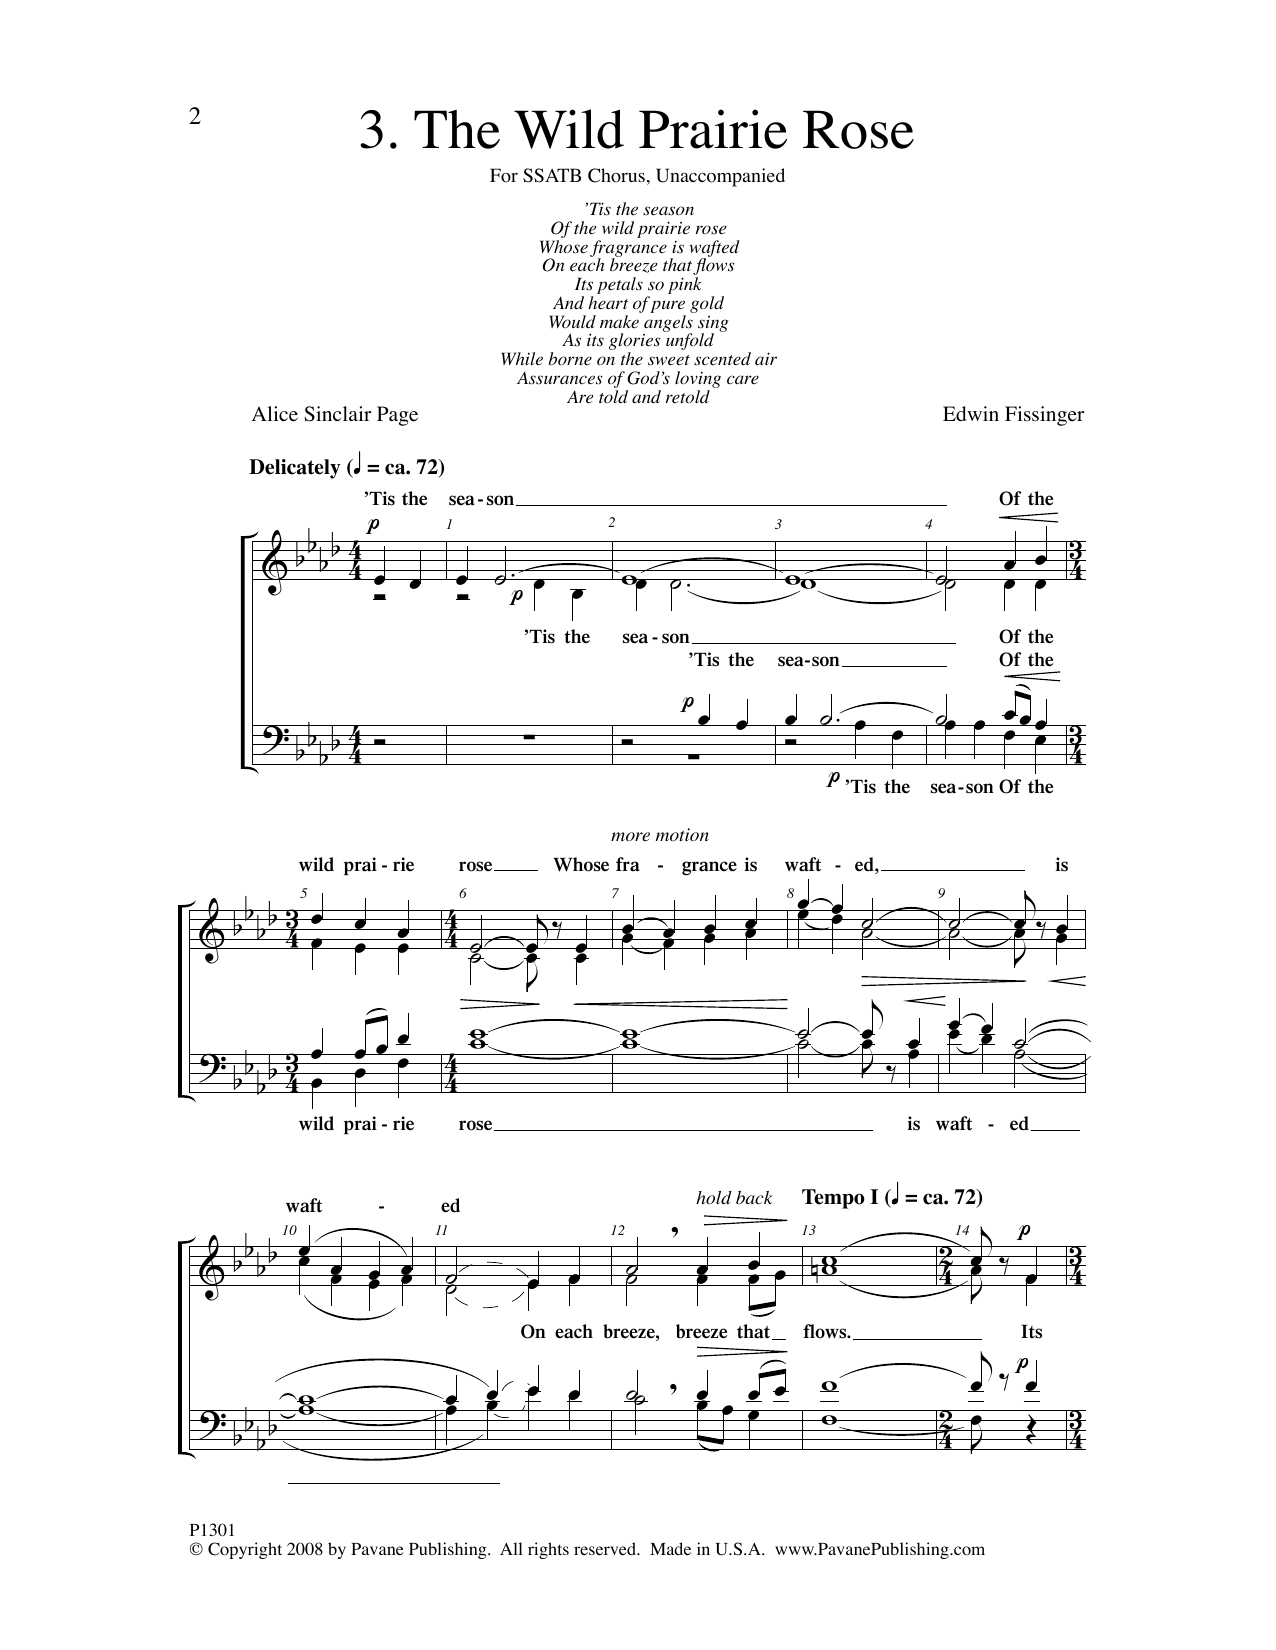 Edwin Fissinger The Wild Prairie Rose Sheet Music Notes & Chords for SATB Choir - Download or Print PDF